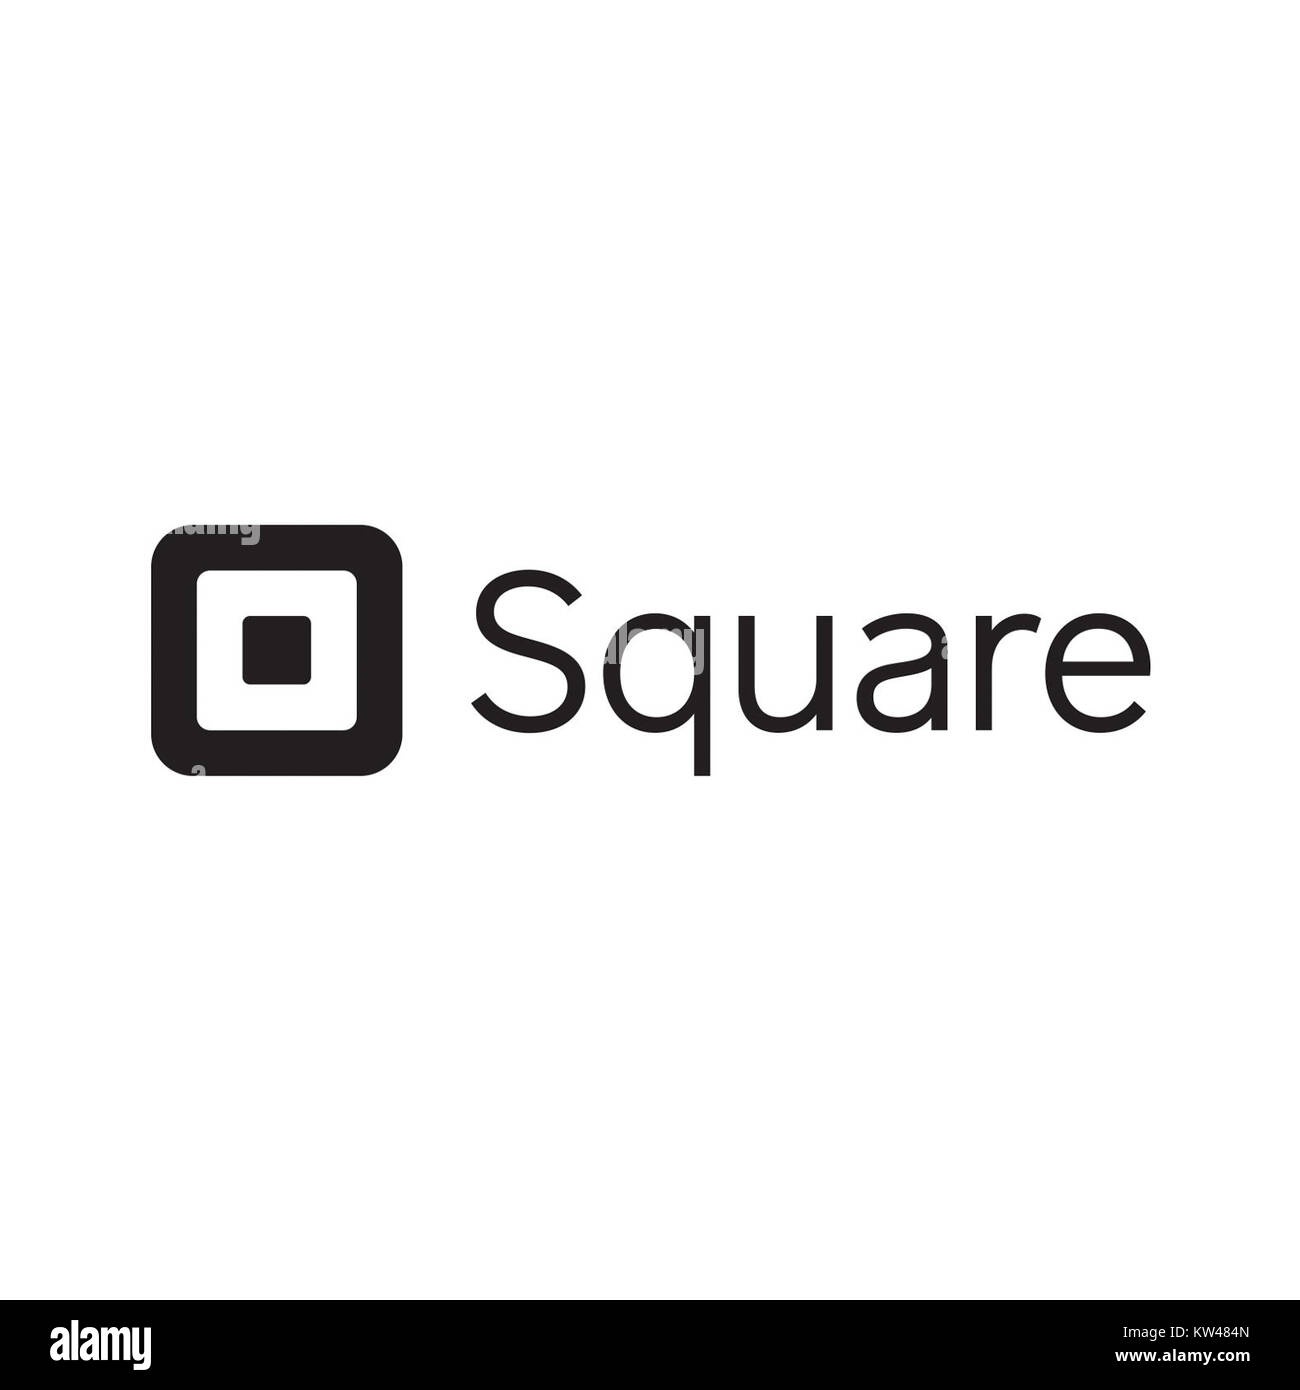 Square, Inc. logo Stock Photo